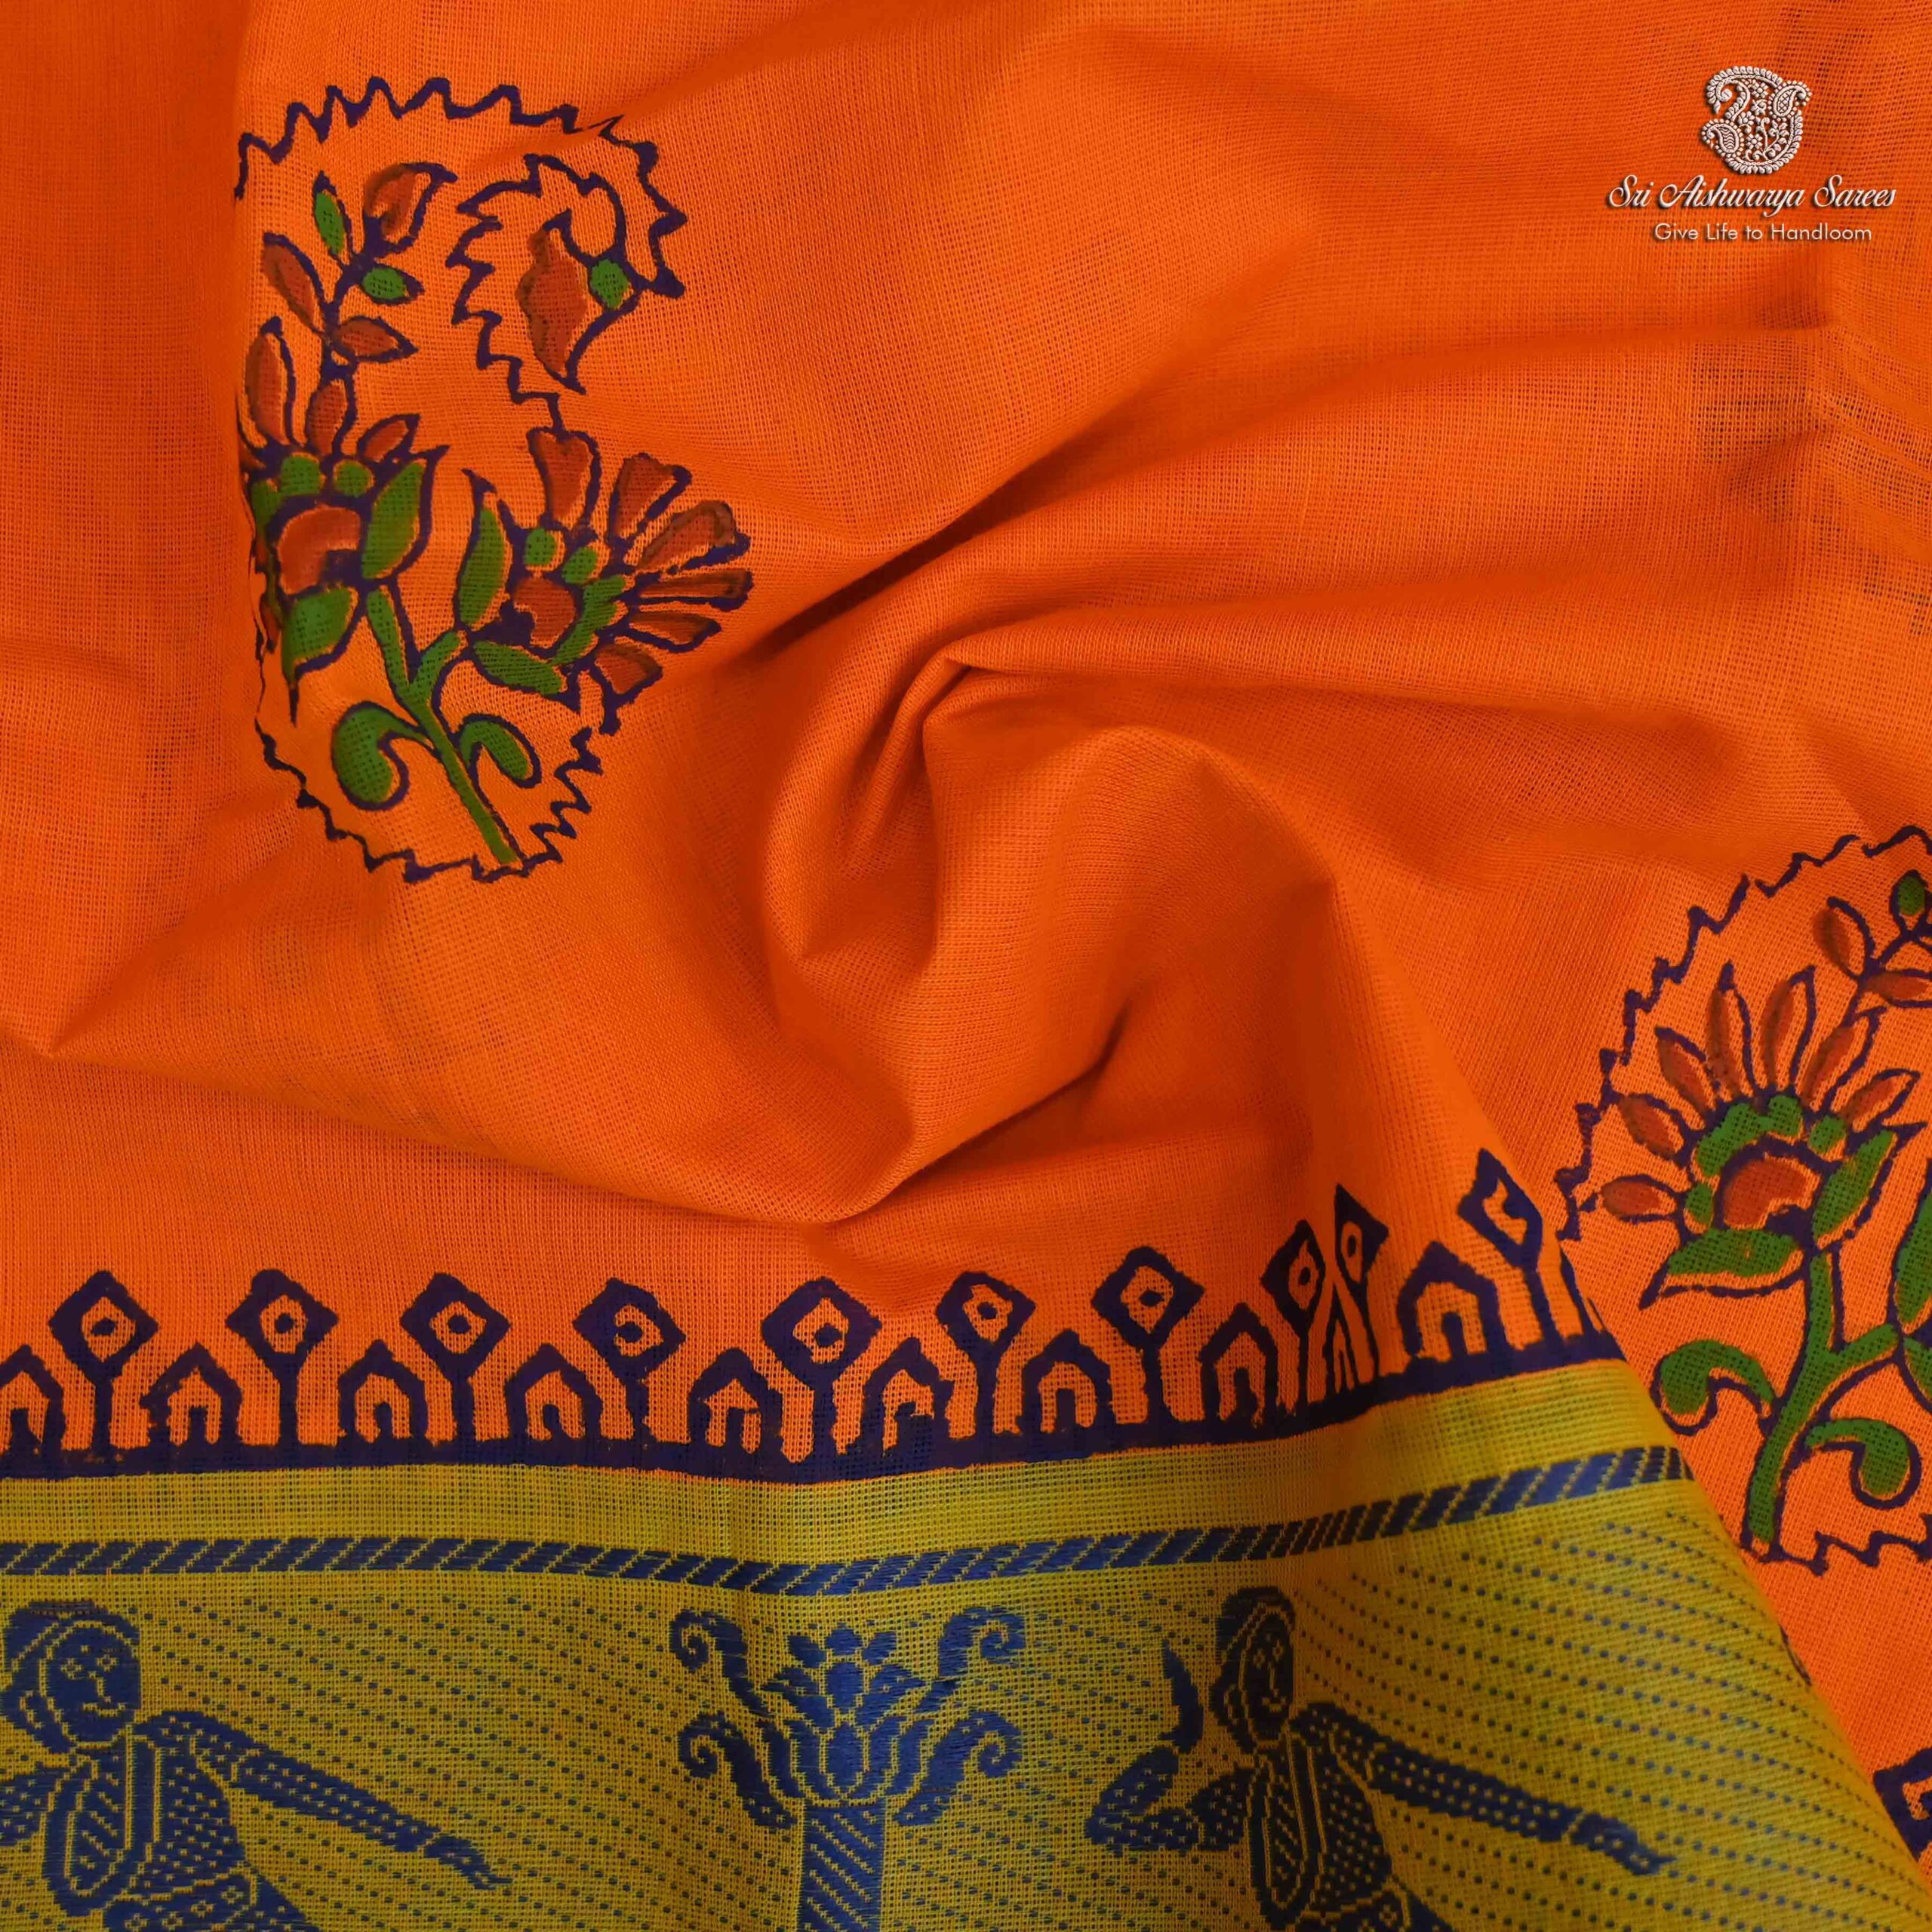 gaanaviart_studio - Our saree contour gives u the perfect shape for ur six  yard drape. Place ur orders at www.gaanaviartstudio.com #sareelovers  #sareecontours #sareeshaper #gaayisareecontour